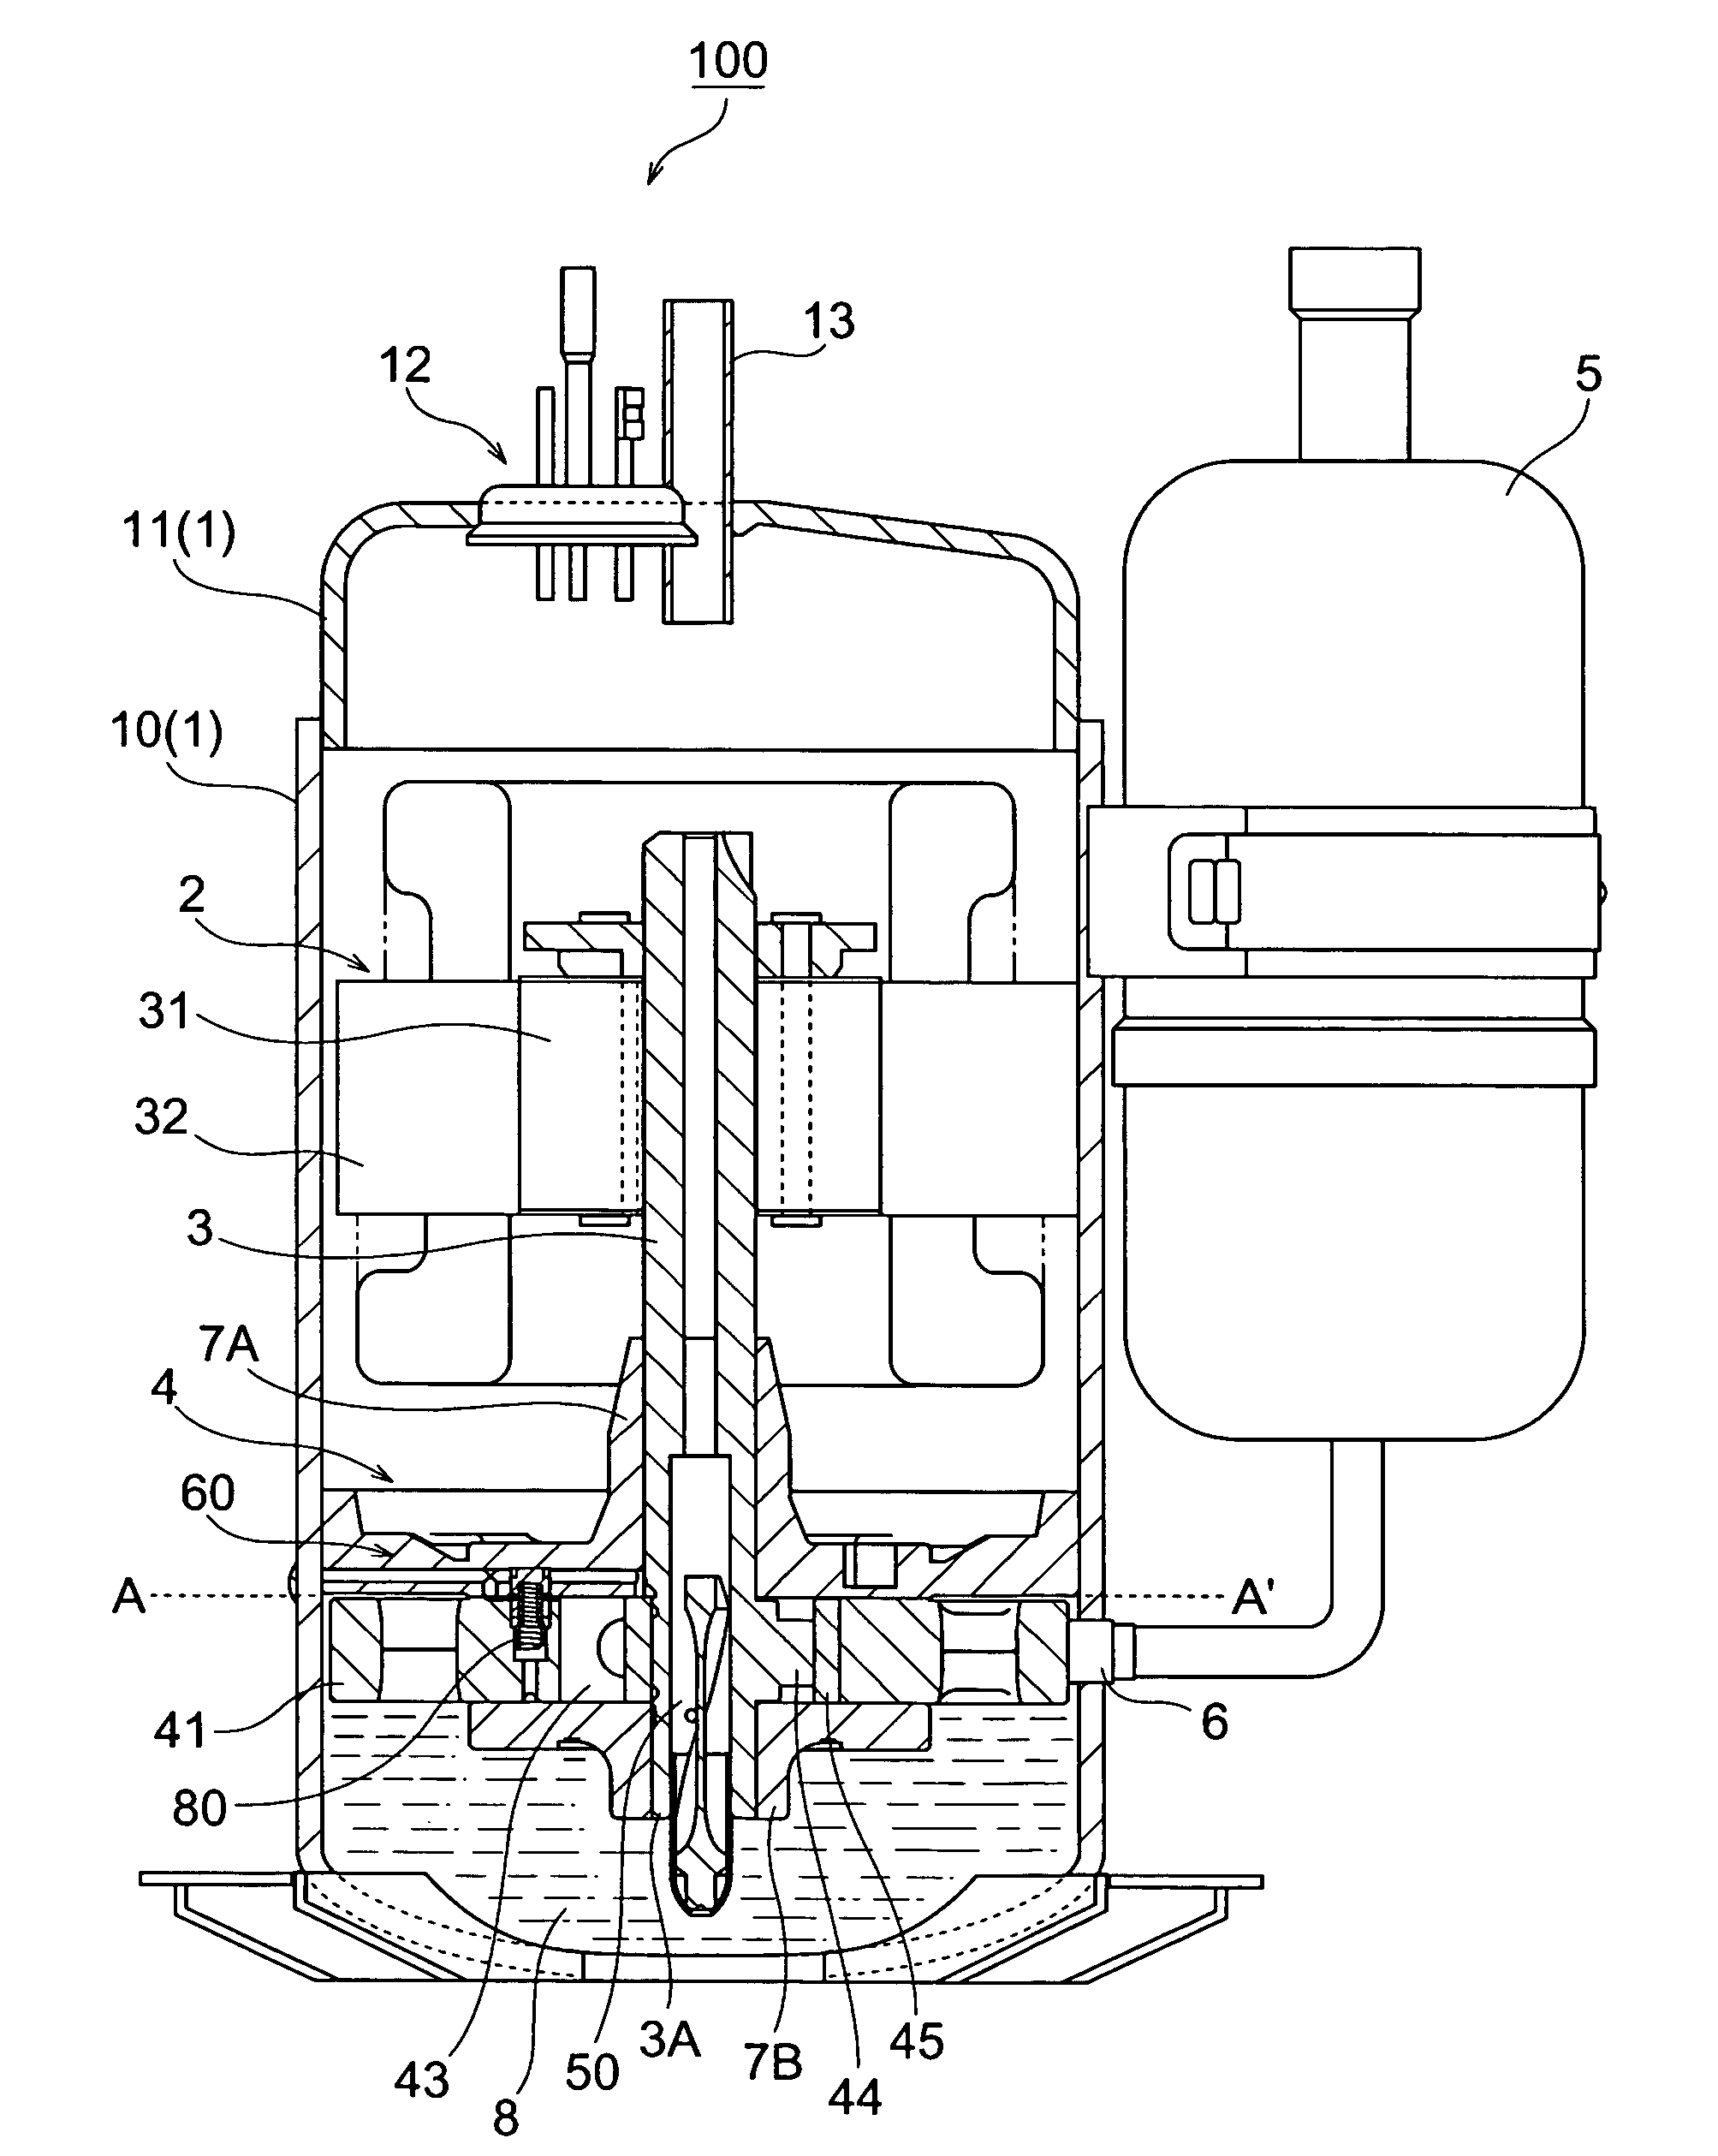 Hermetically sealed compressor having oil supply mechanism based on refrigerant pressure